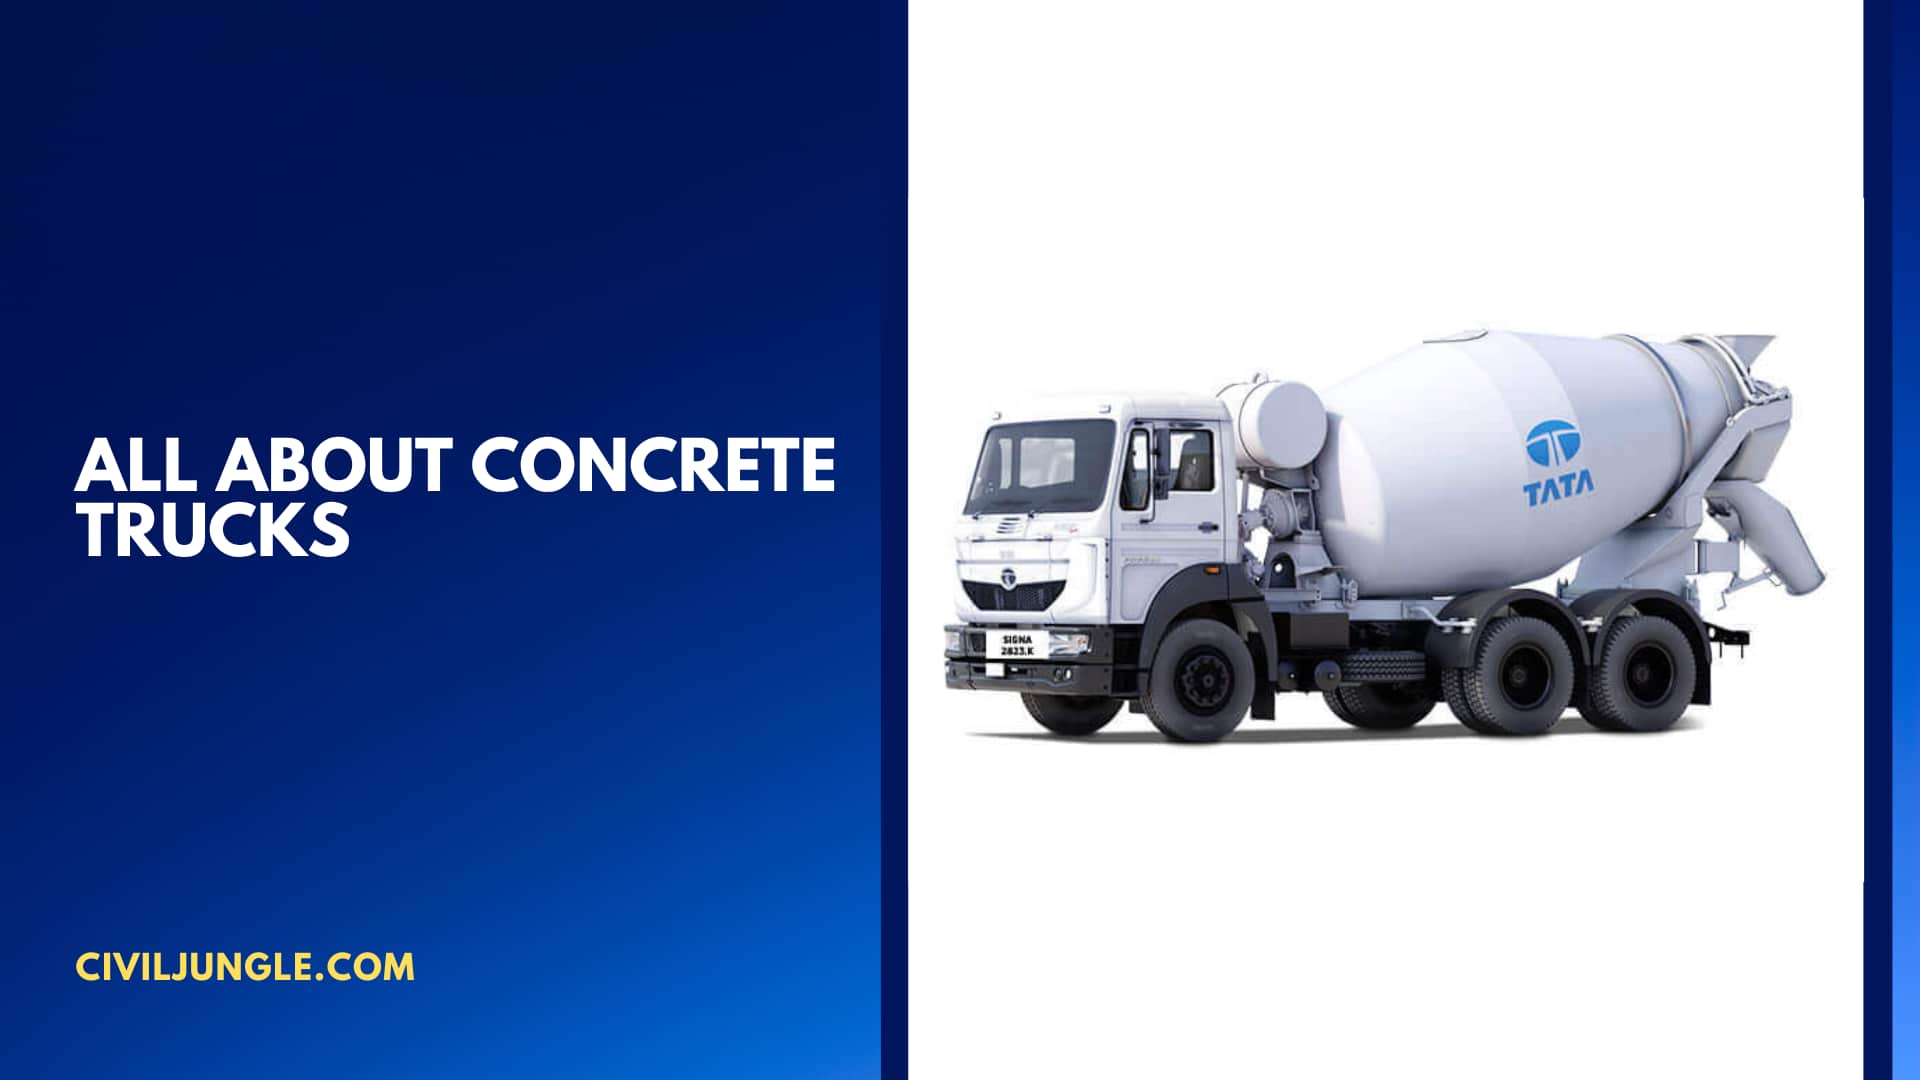 All About Concrete Trucks